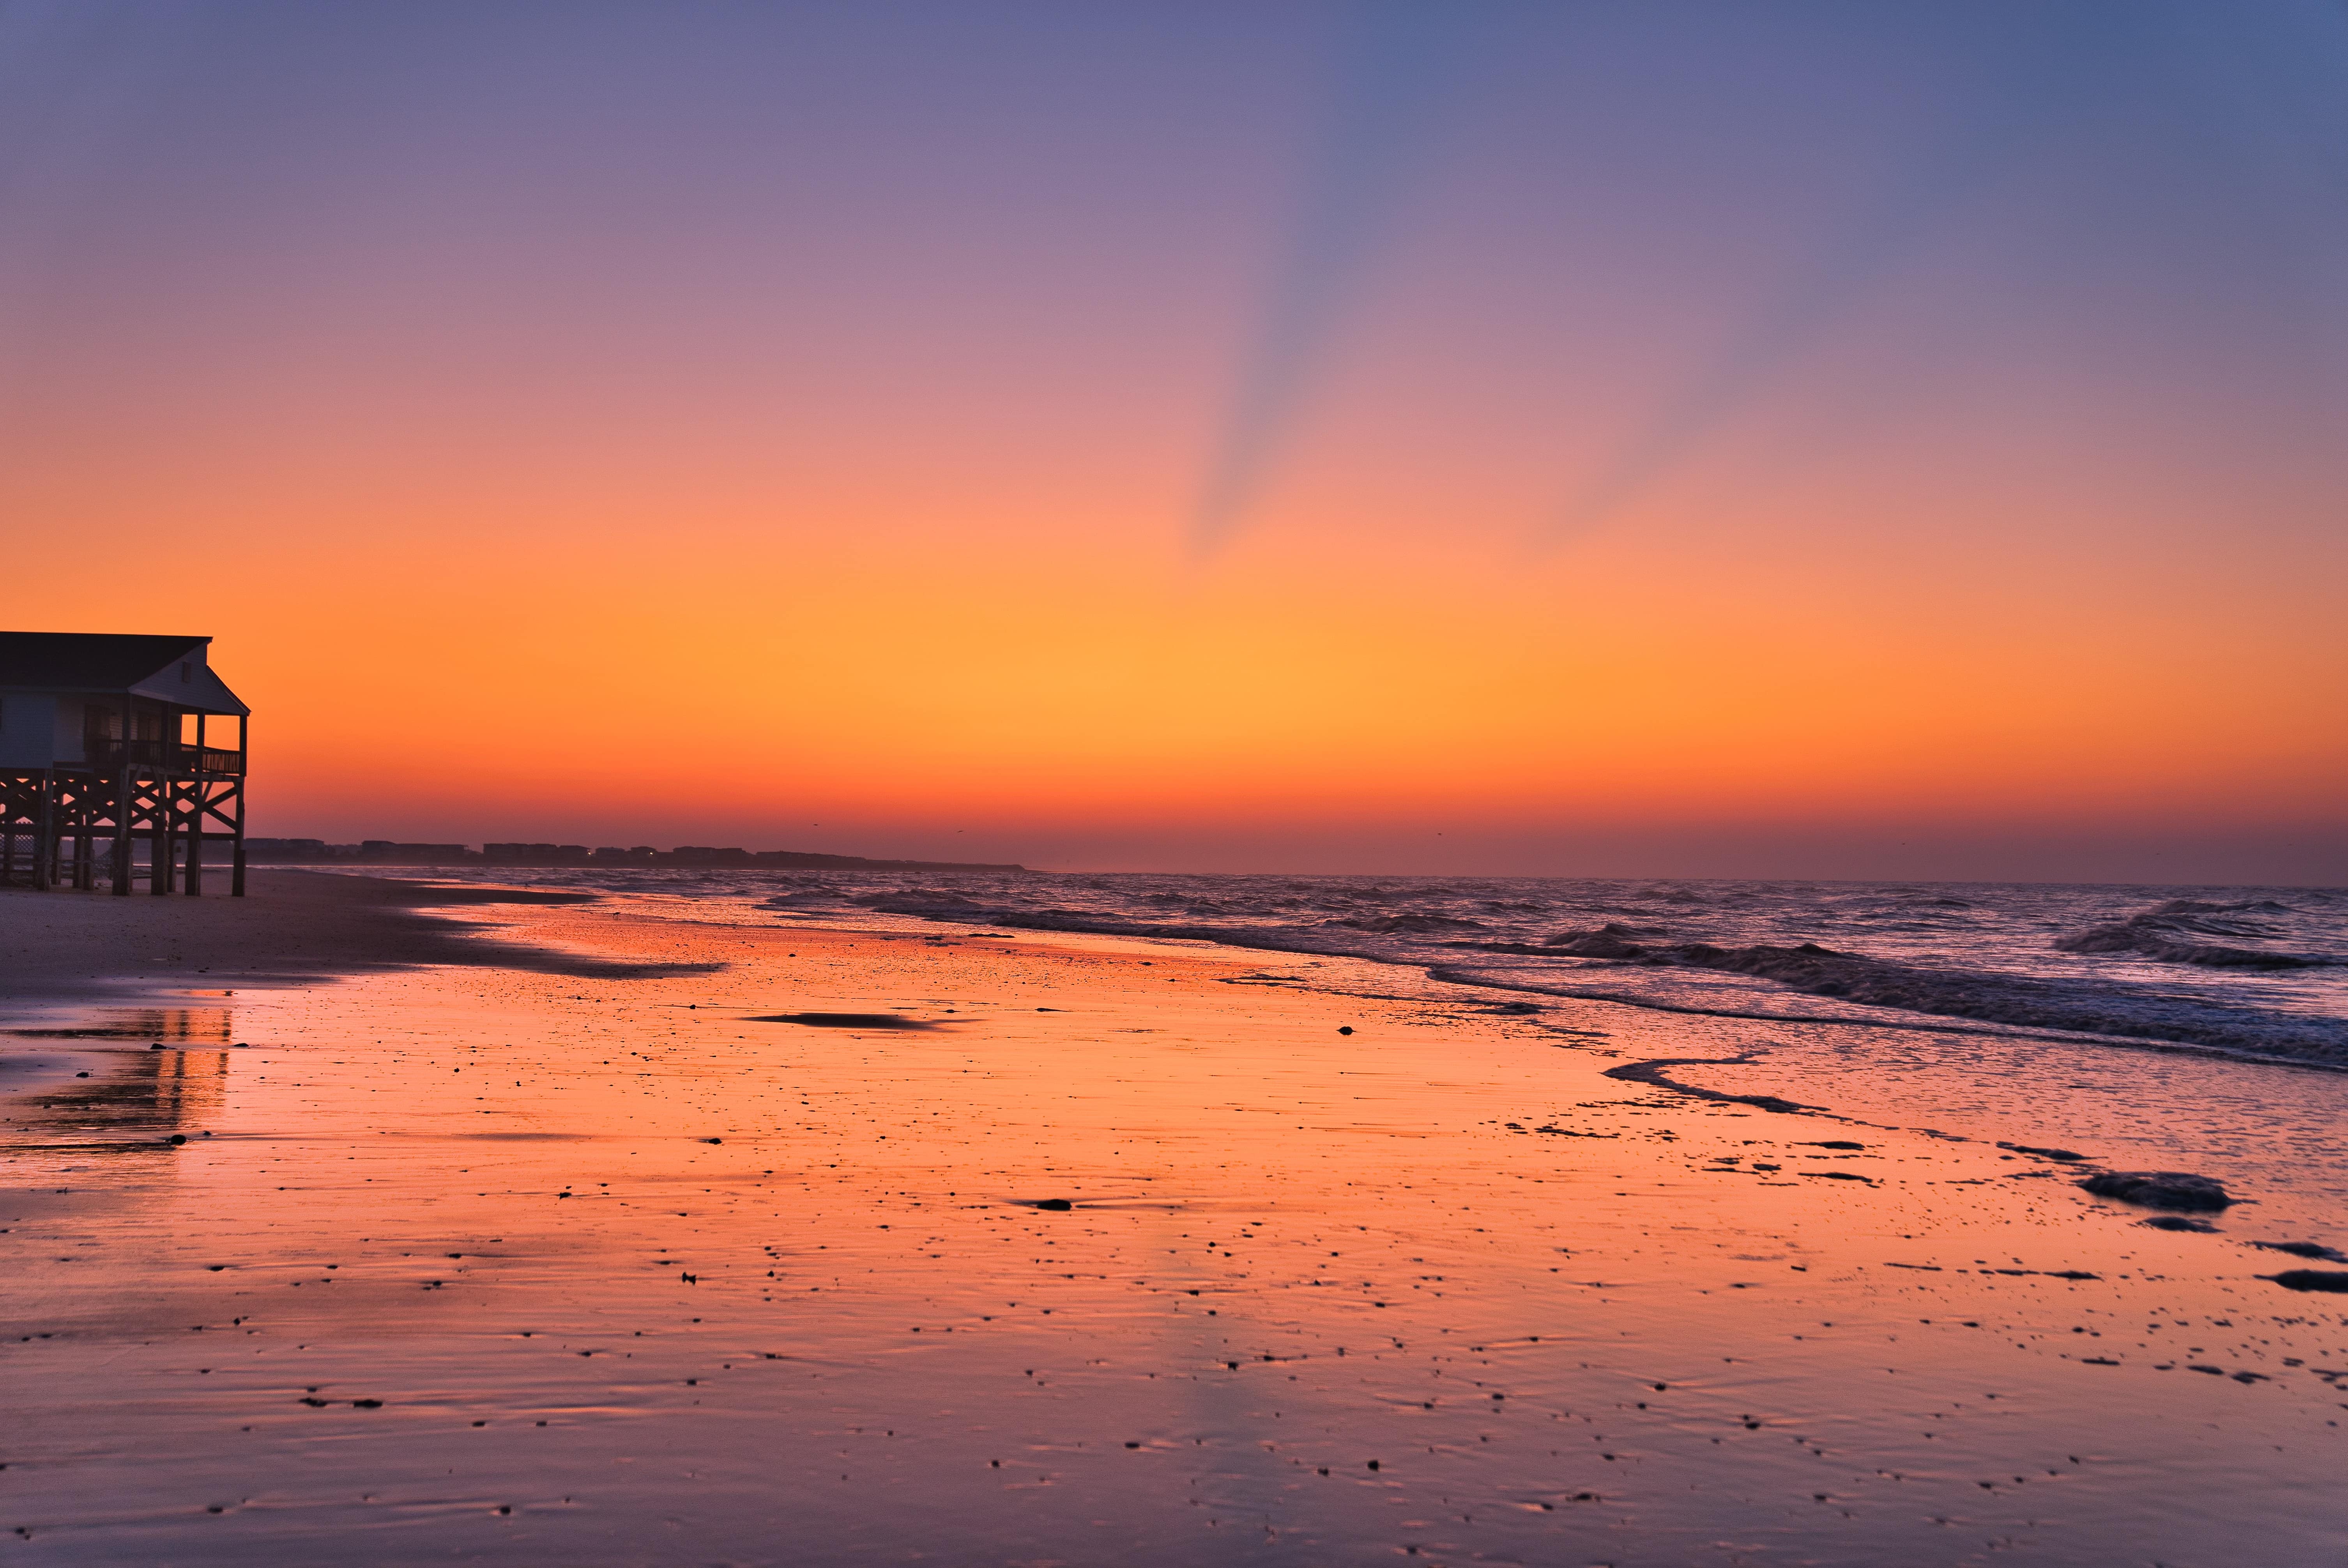 Stock image - Ocean Isle Beach beach house at sunrise sunset - Photo by Clint Patterson on Unsplash